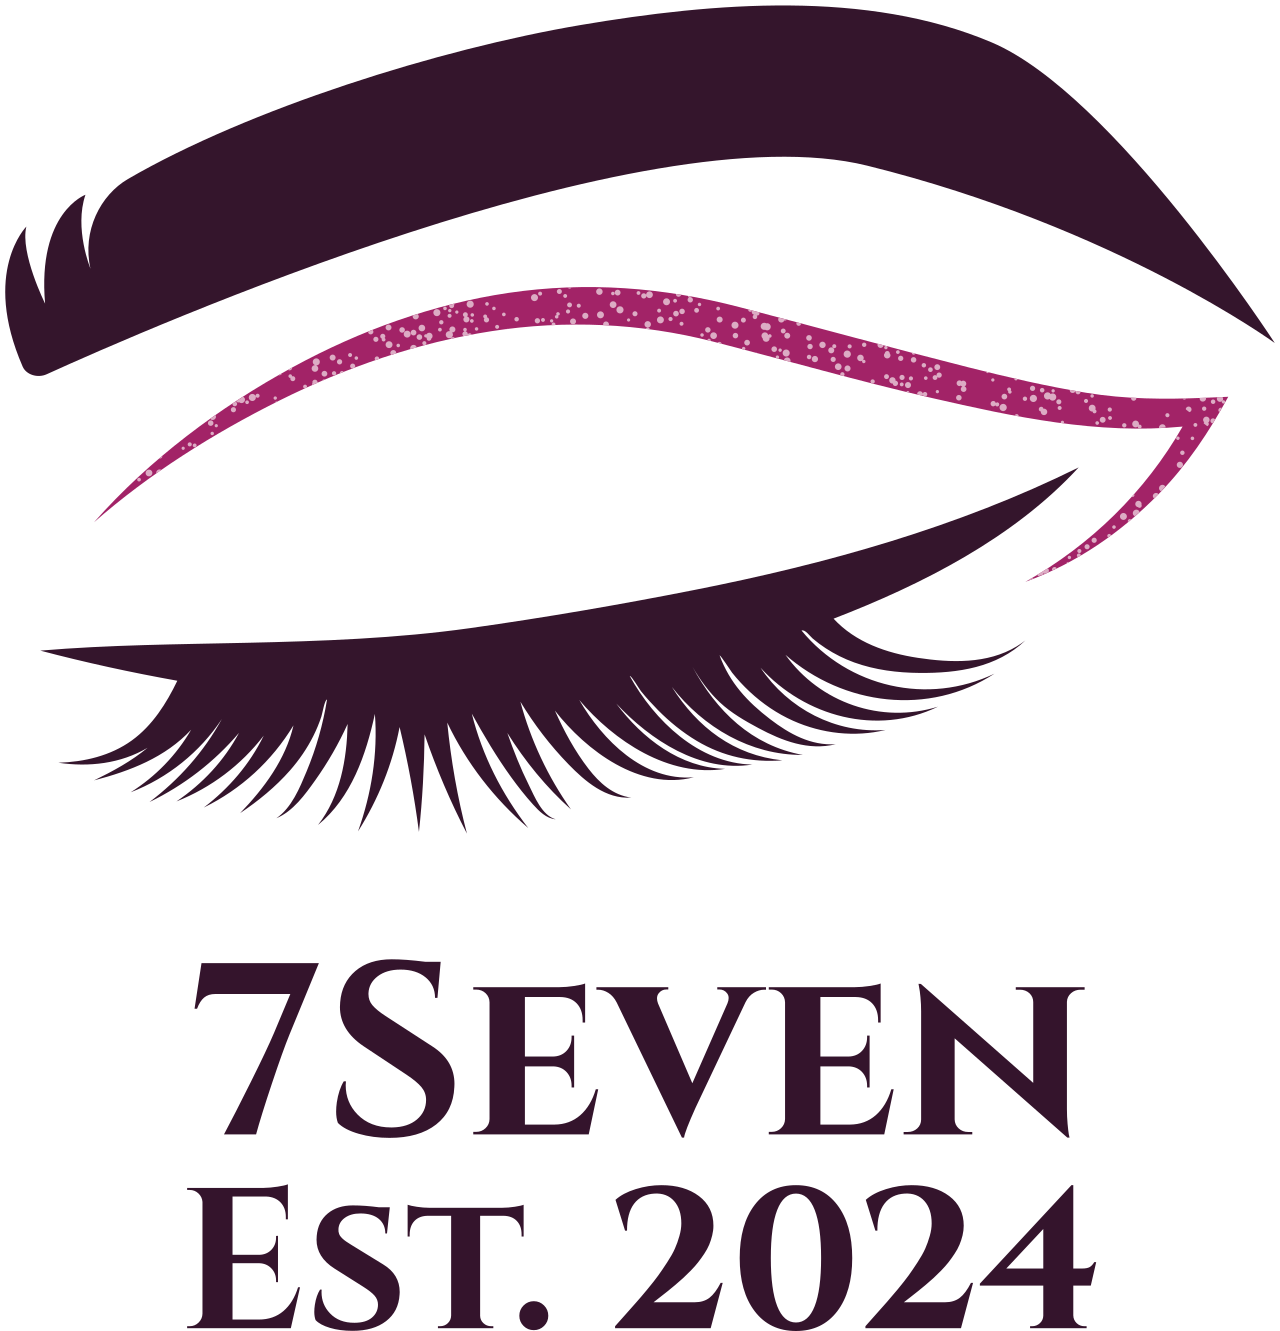 7Seven's logo